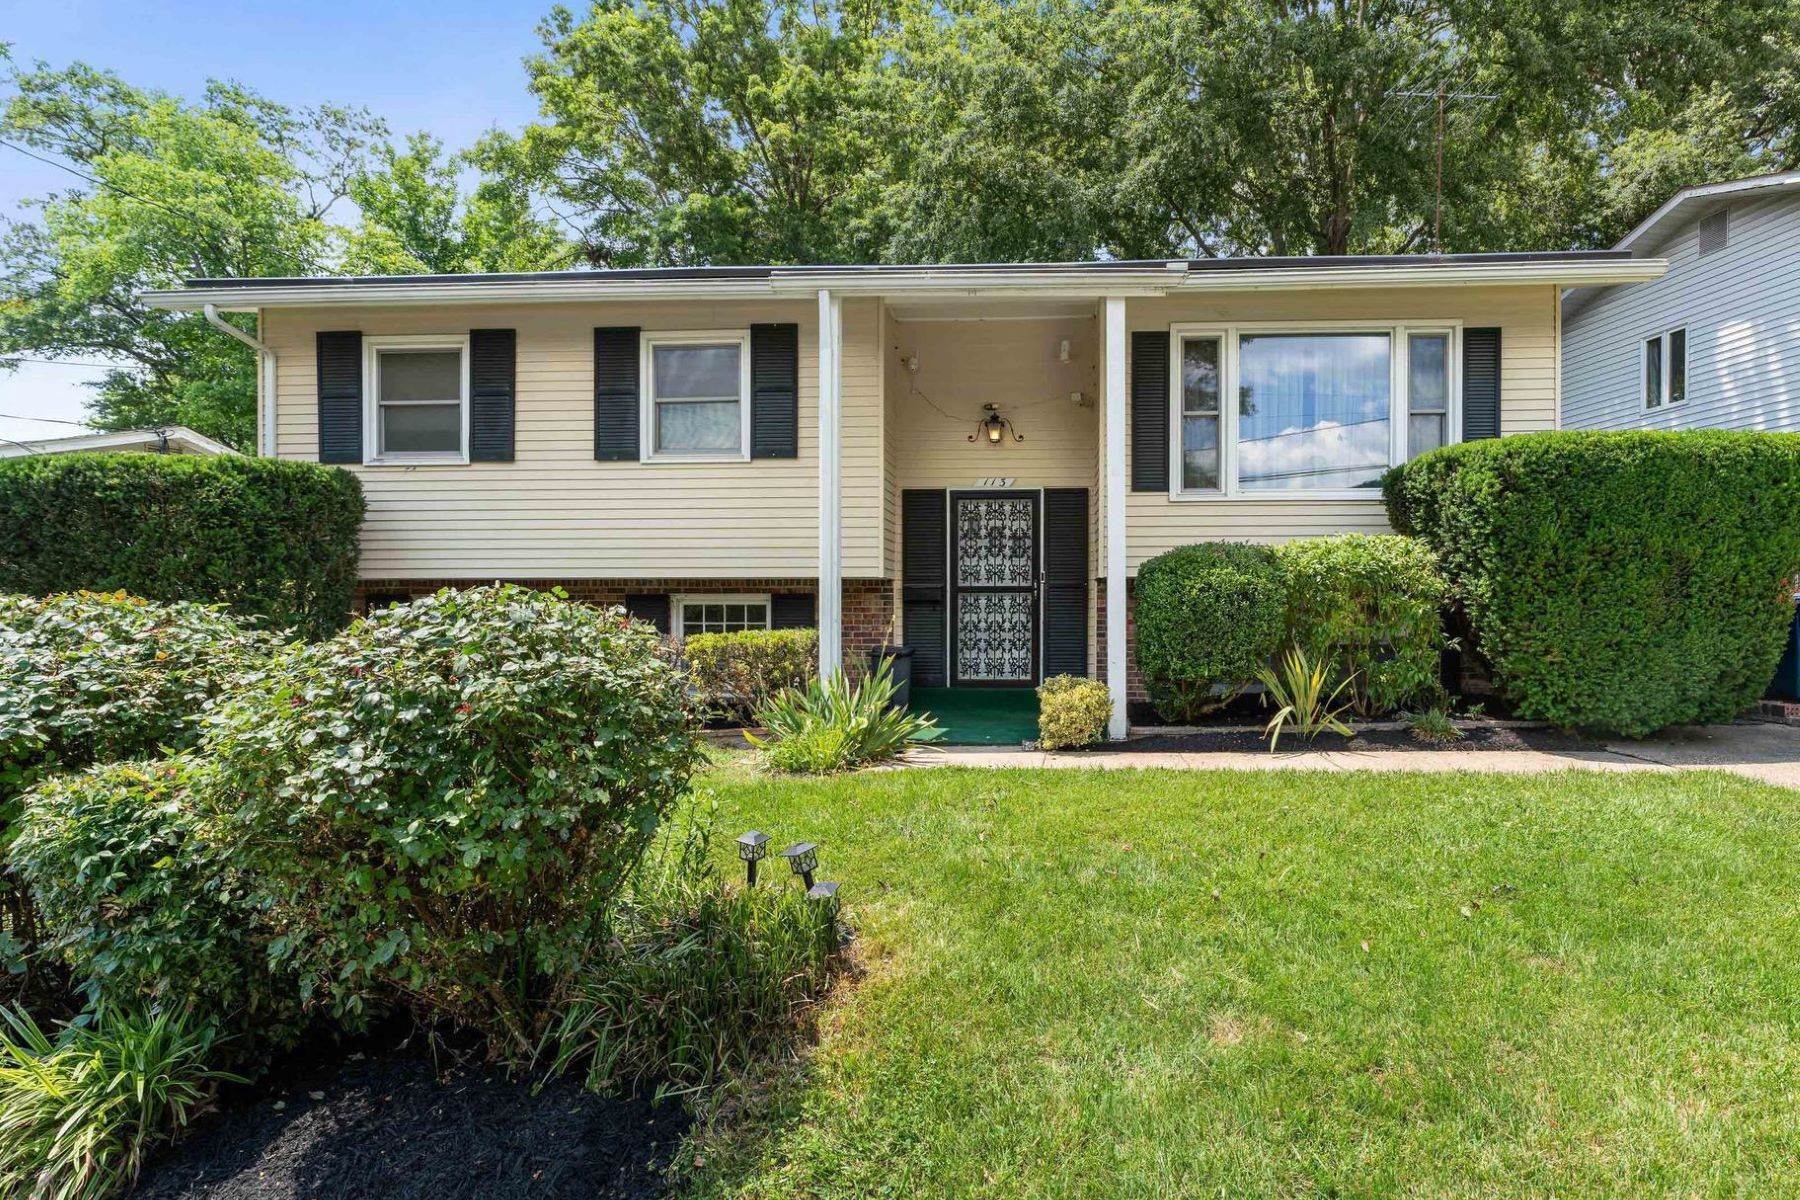 Property for Sale at 113 Rosewood Dr Greenbelt, Maryland 20770 United States